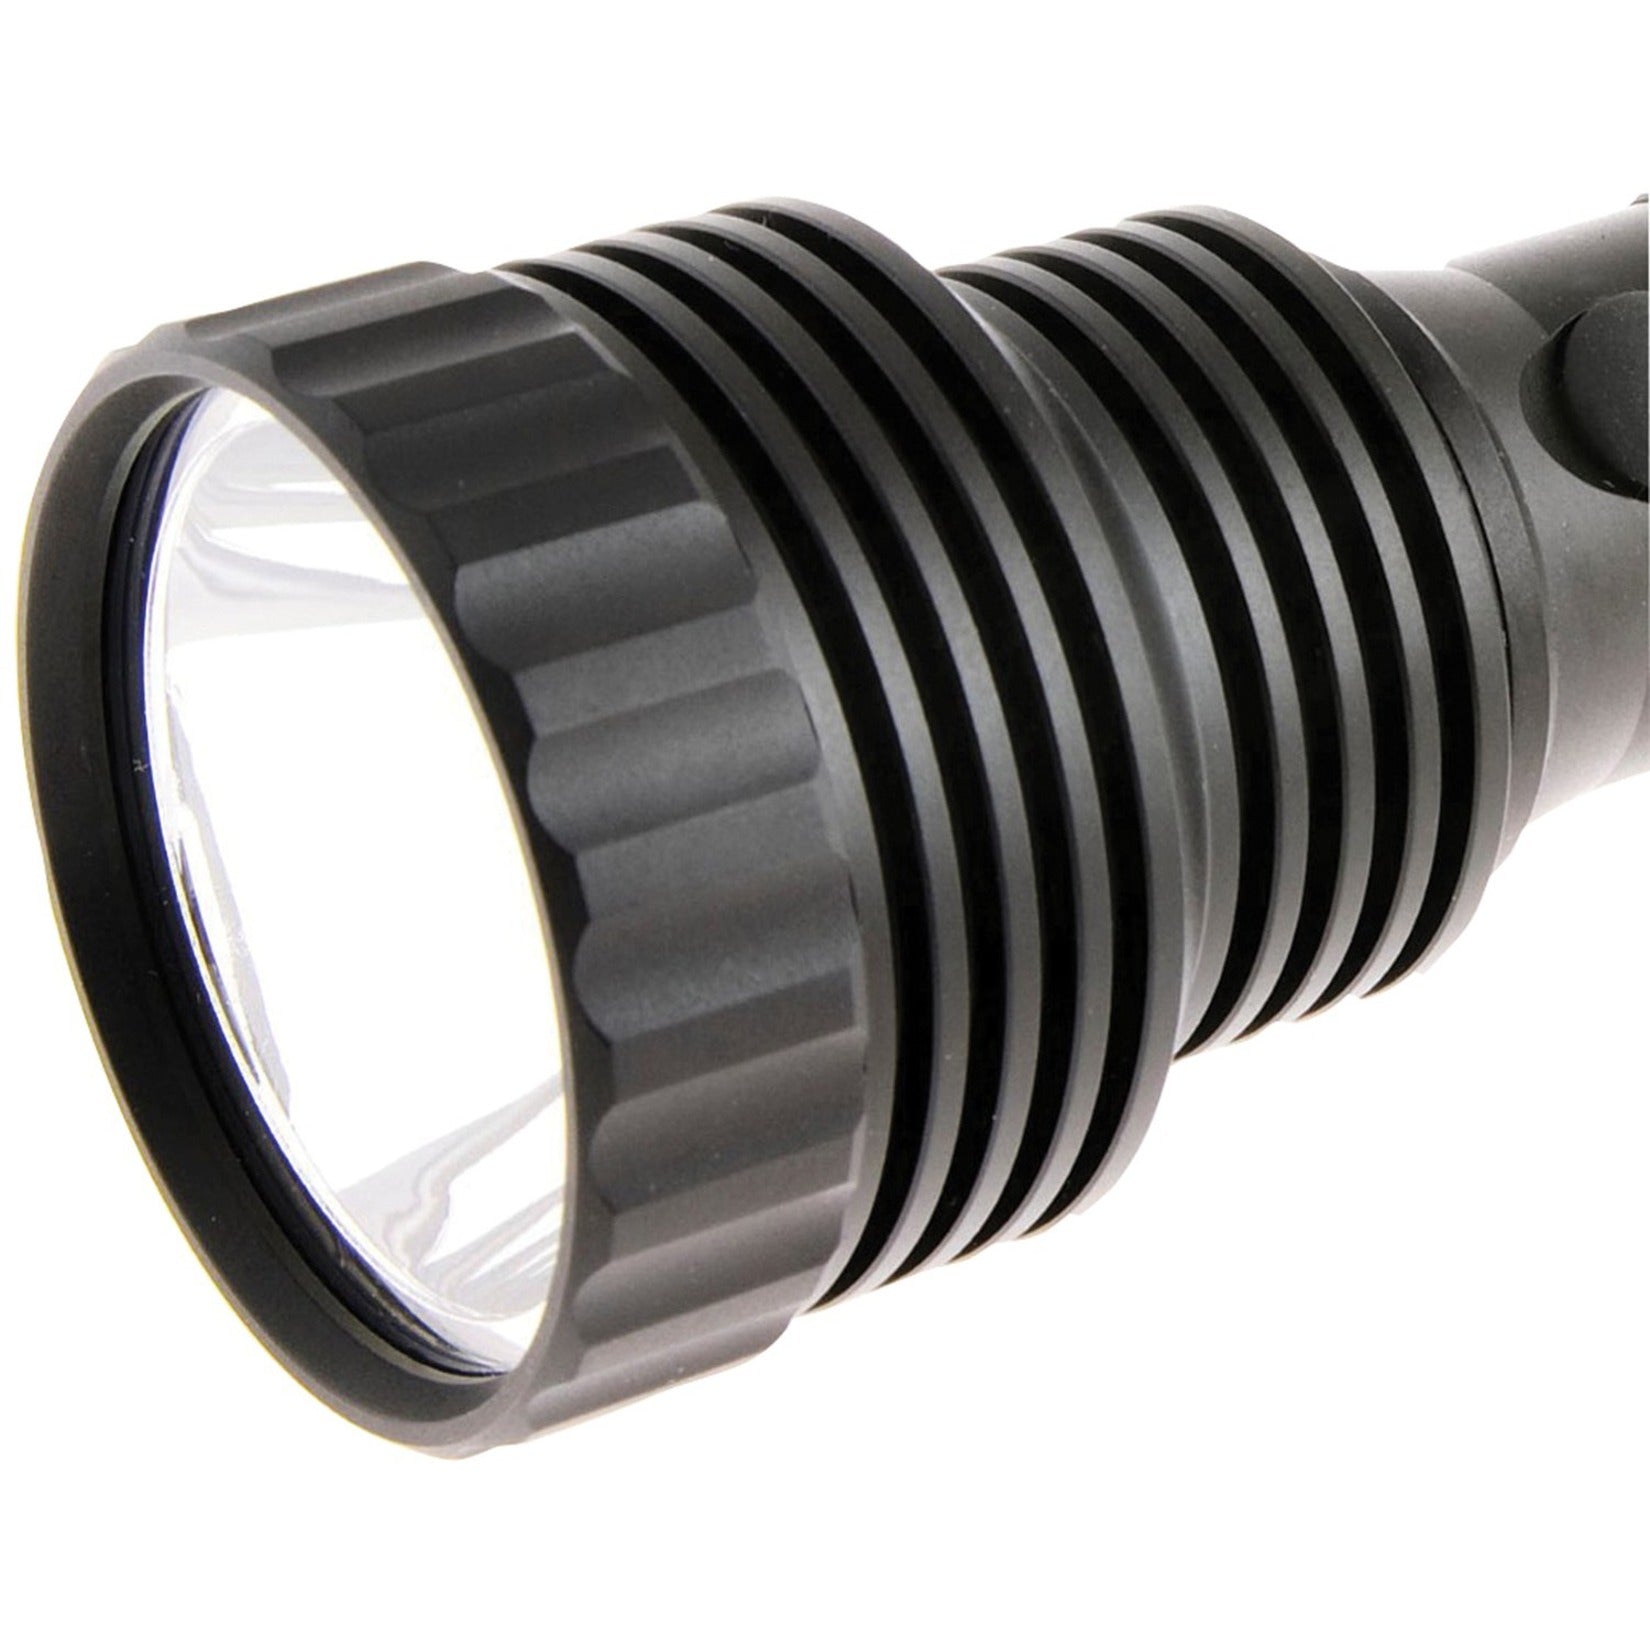 Dorcy 41-4299 Flashlight, Anodized Aluminum, Black, 220 lm, 2 Hour Battery Life